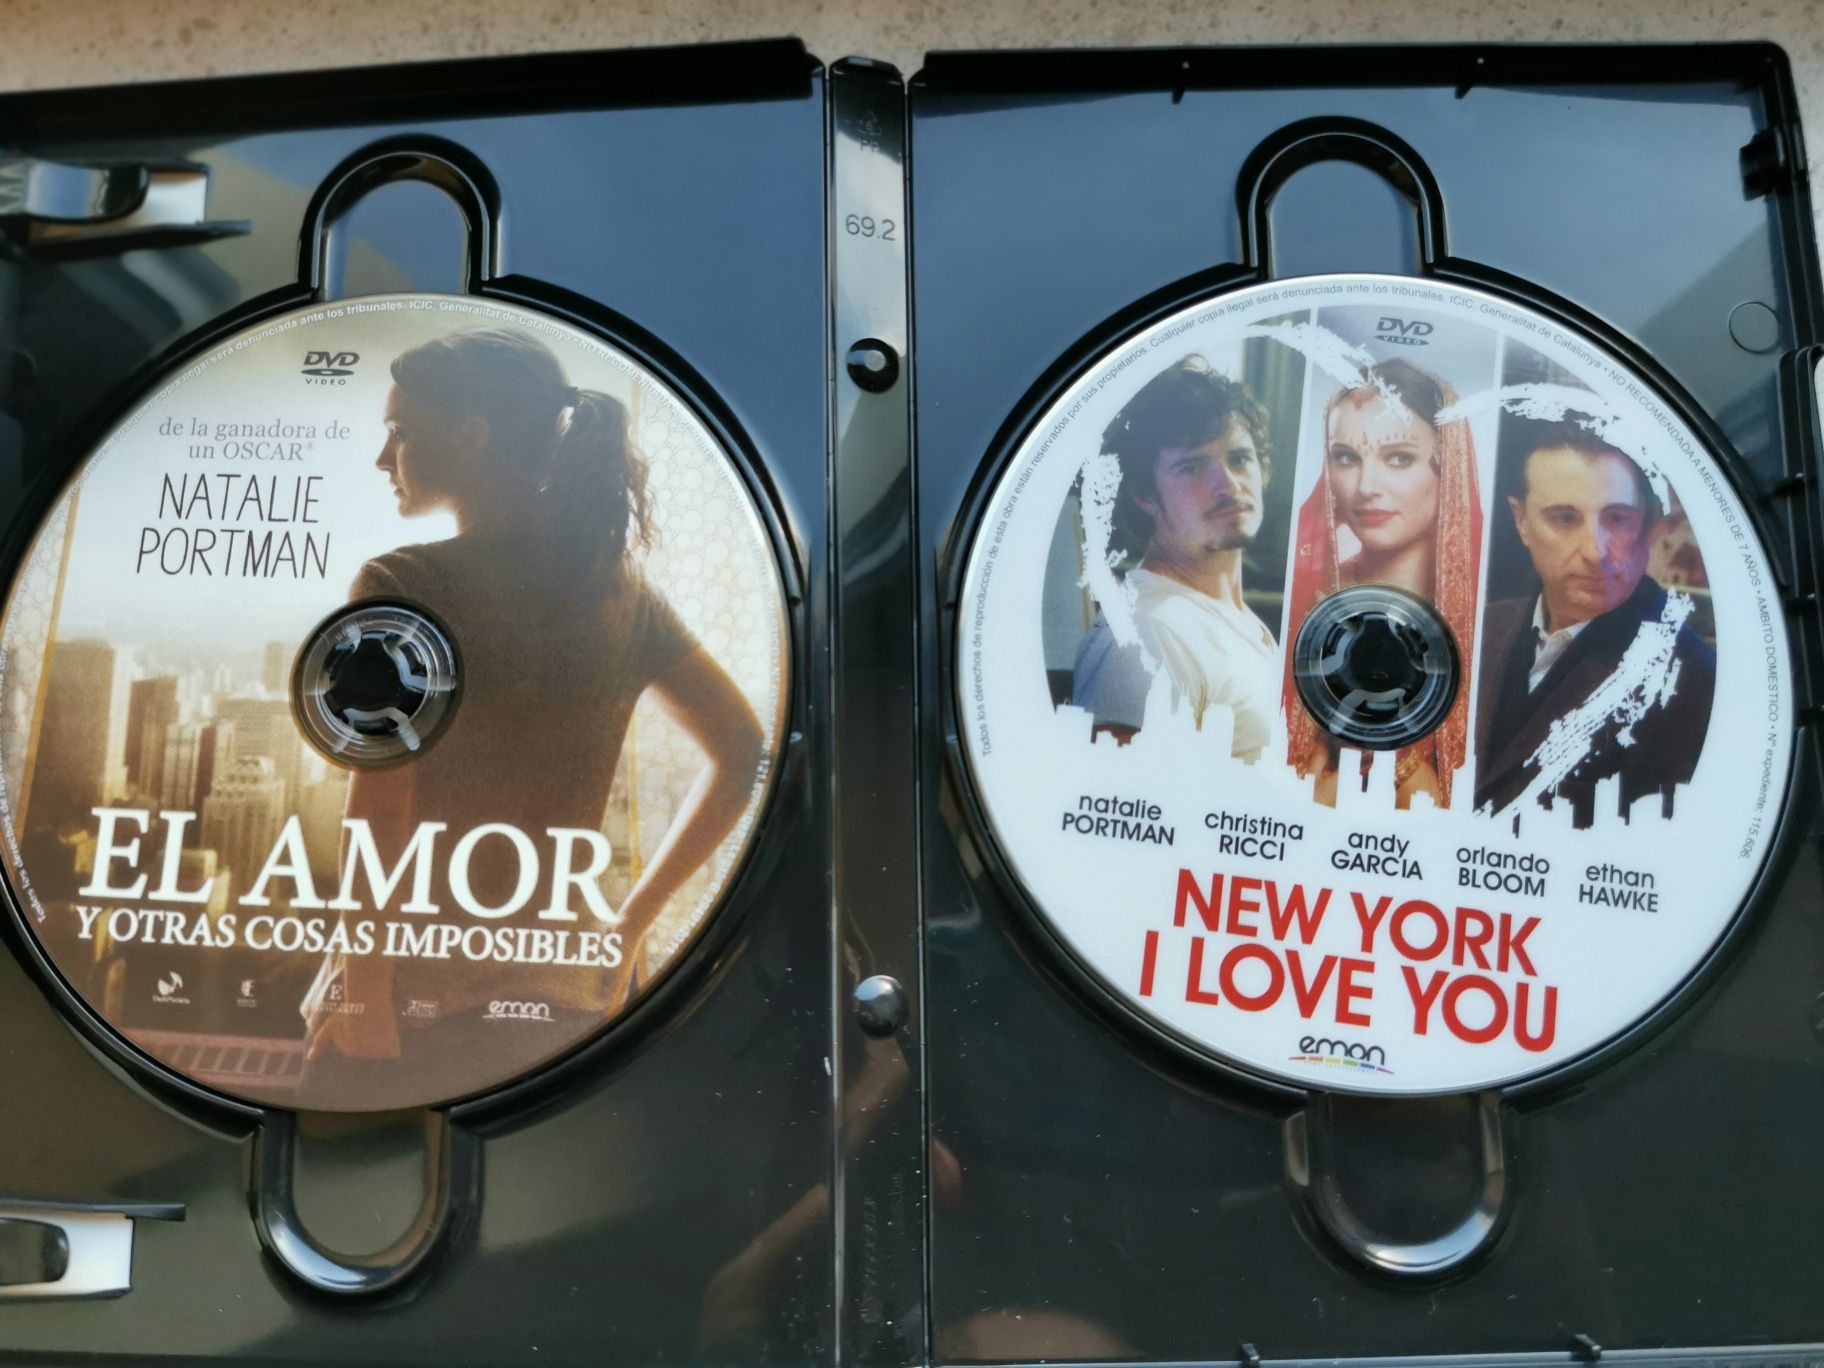 2 DVDs actriz Natalie Portman em caixa conjunta